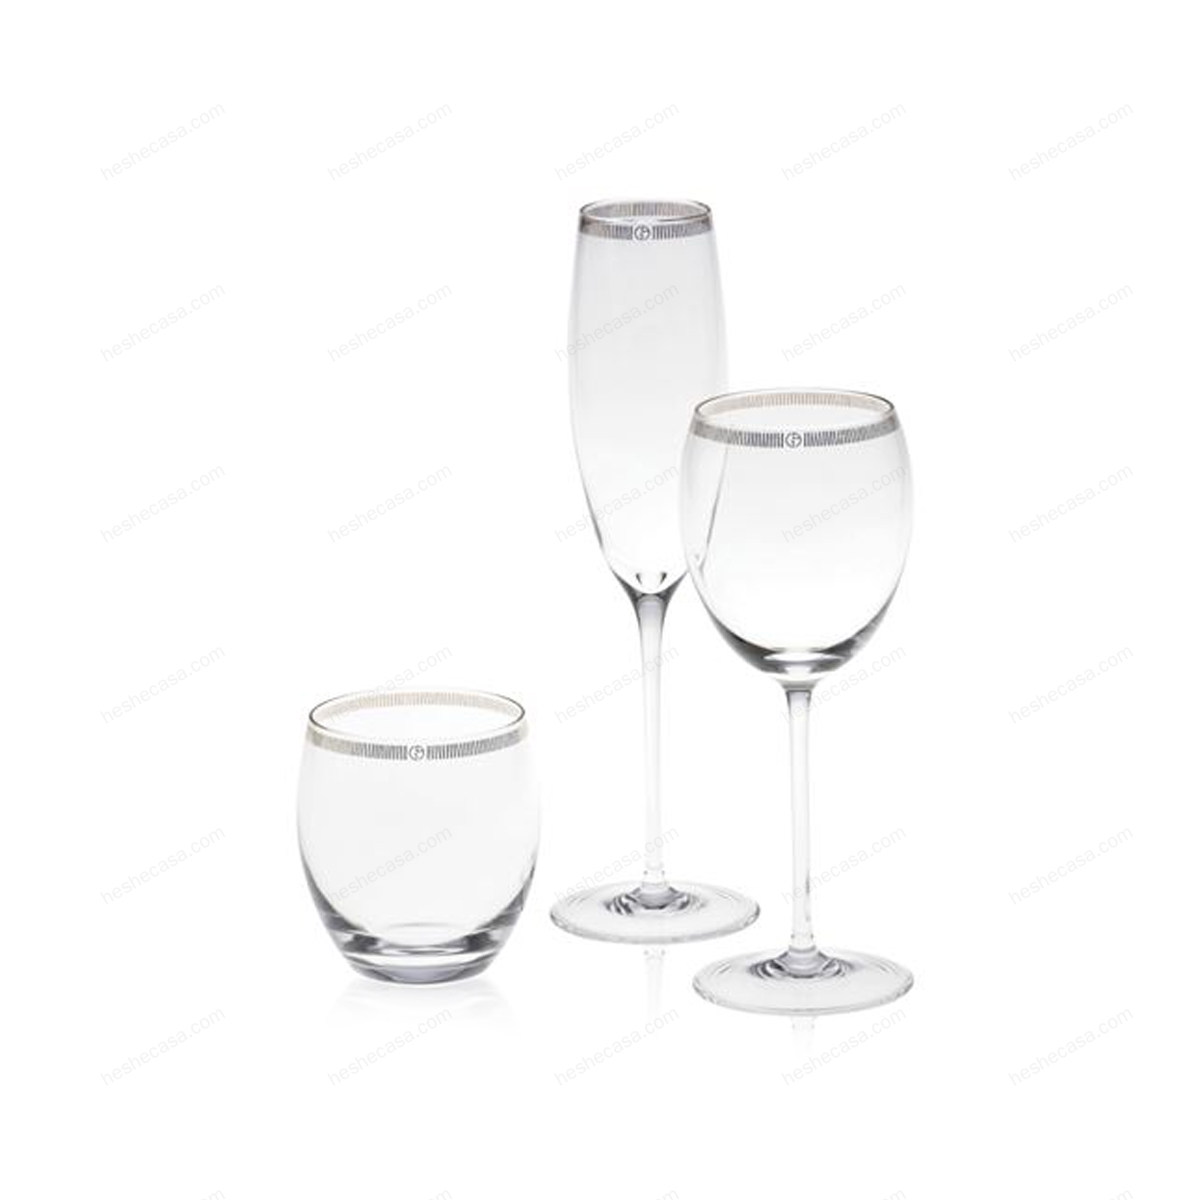 Dvorak Glasses 酒杯